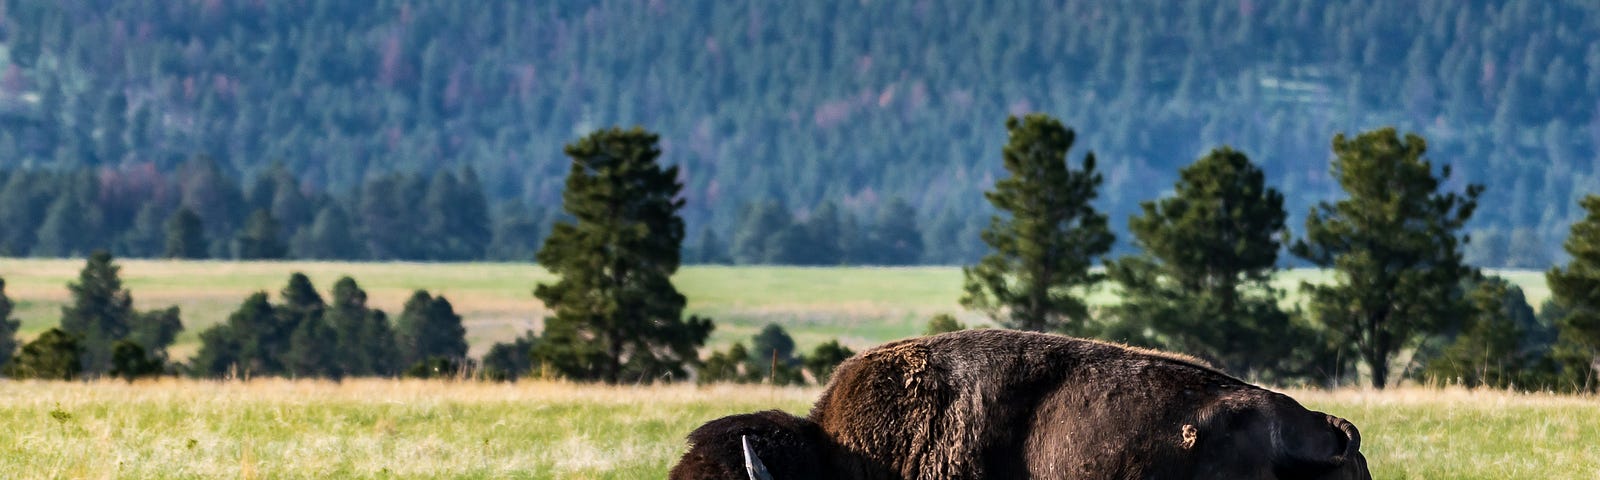 American bison bull in Custer State Park in South Dakota, USA.